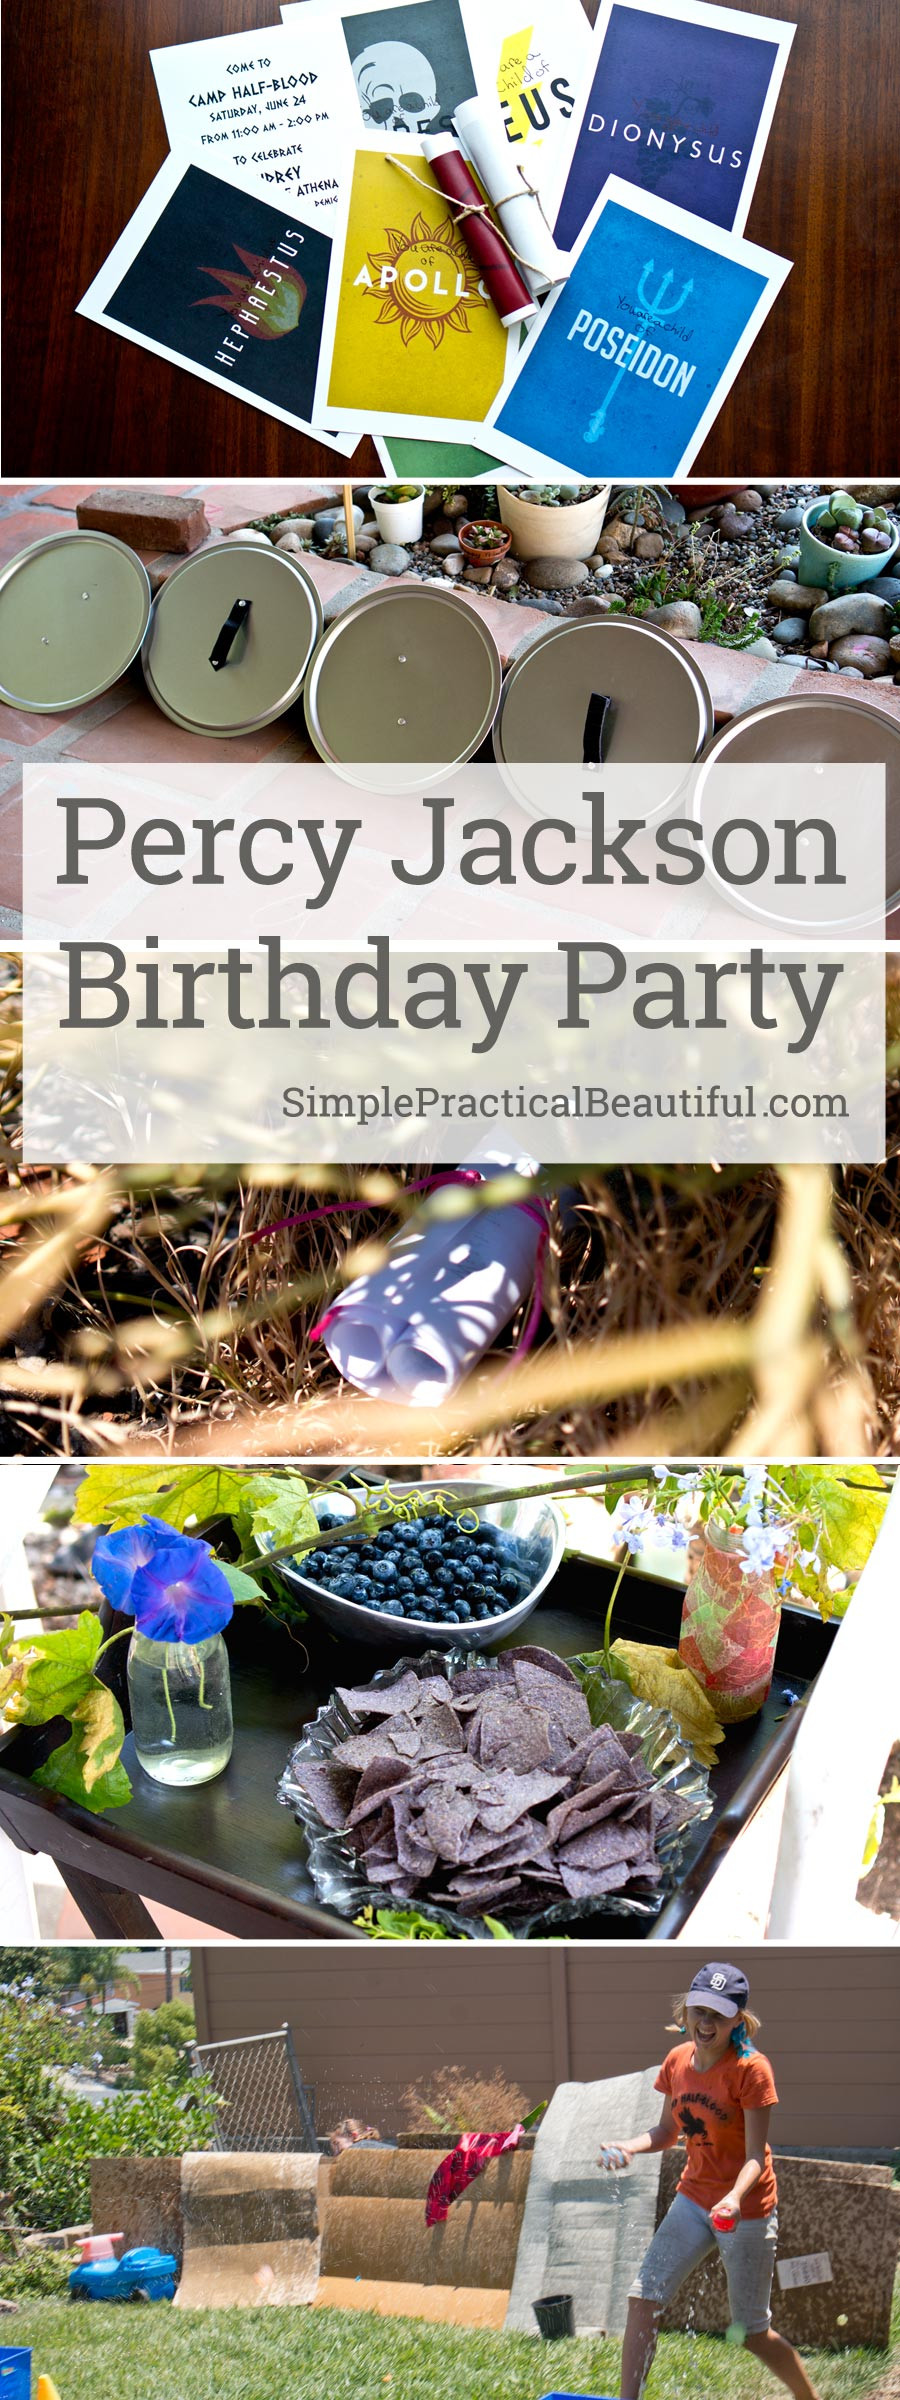 Percy Jackson Birthday Party
 percy jackson birthday party Simple Practical Beautiful